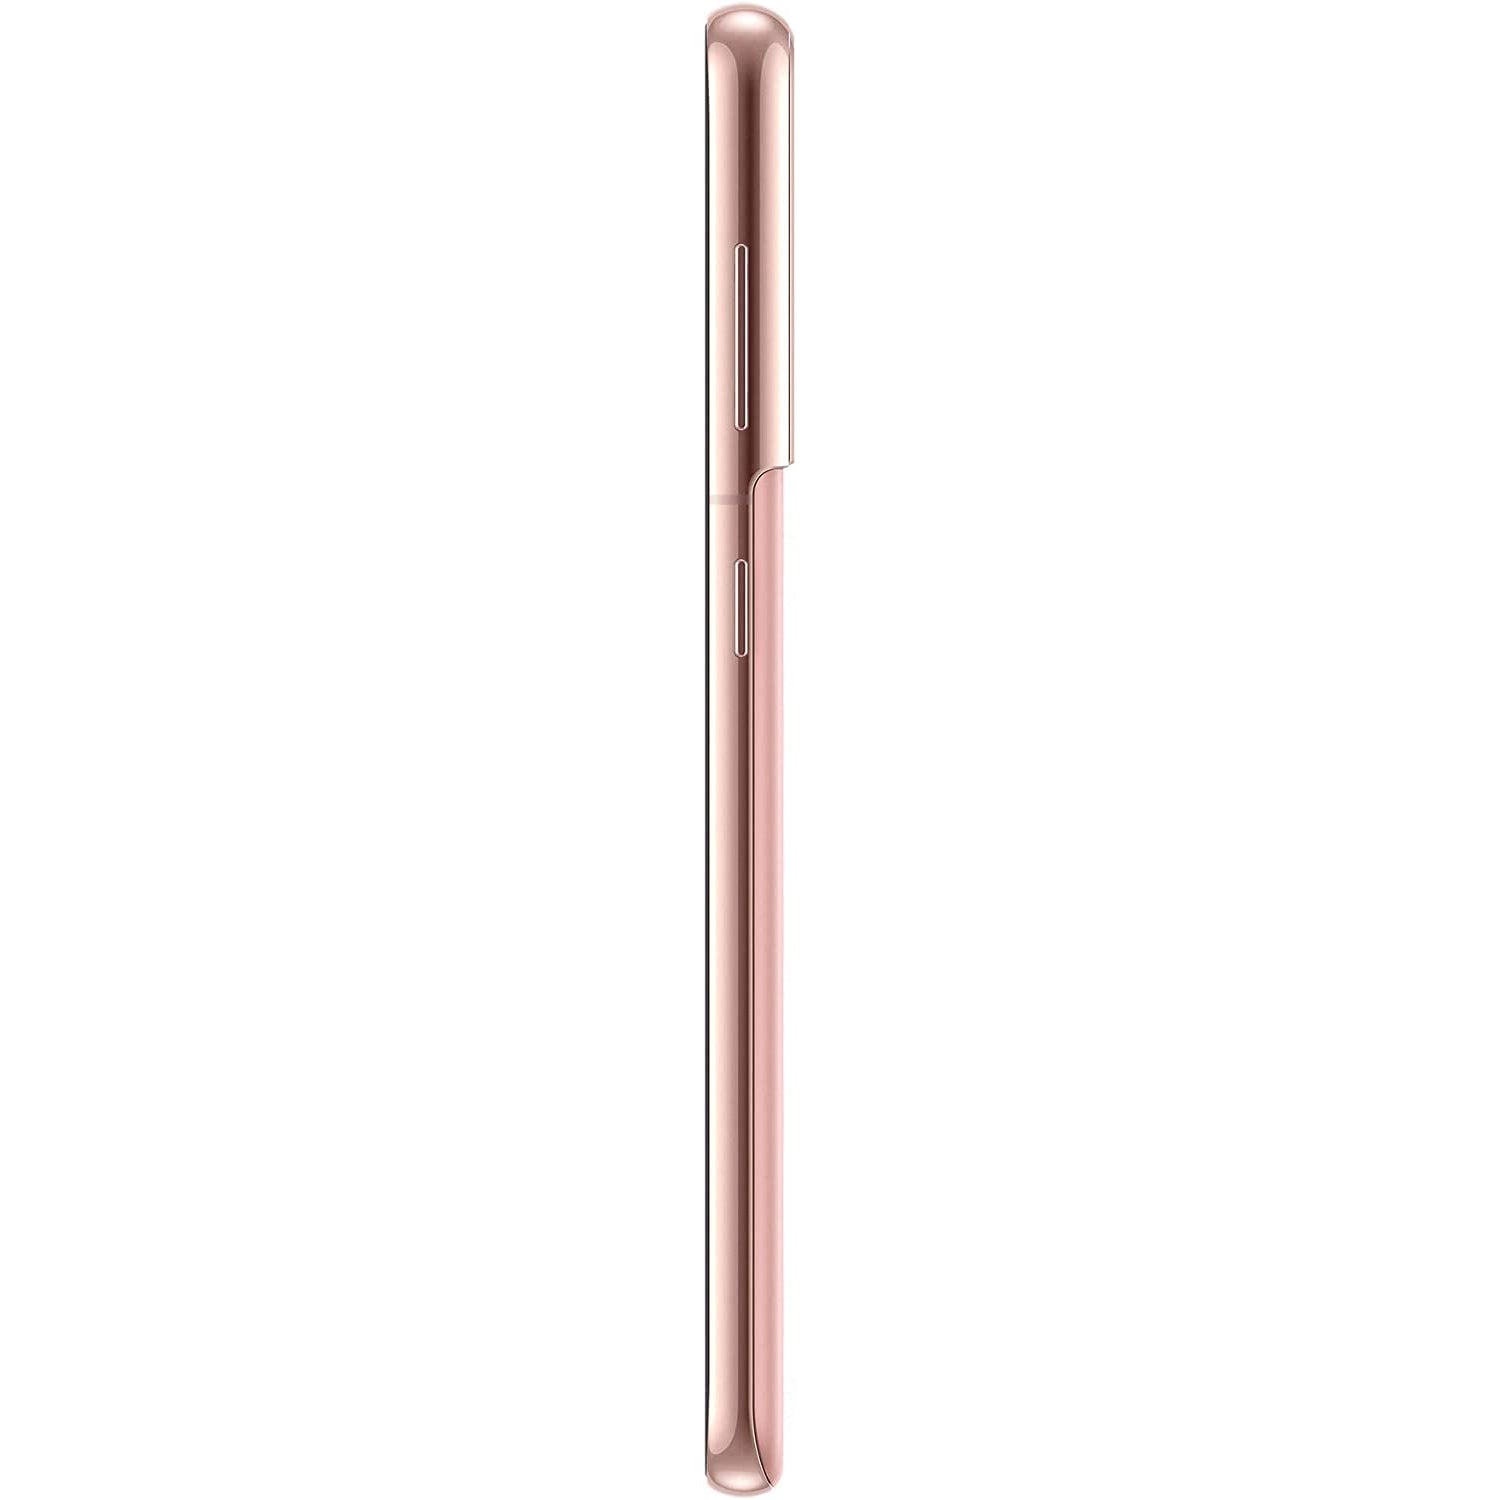 Samsung Galaxy S21 5G 128GB Phantom Pink Unlocked - Good Condition